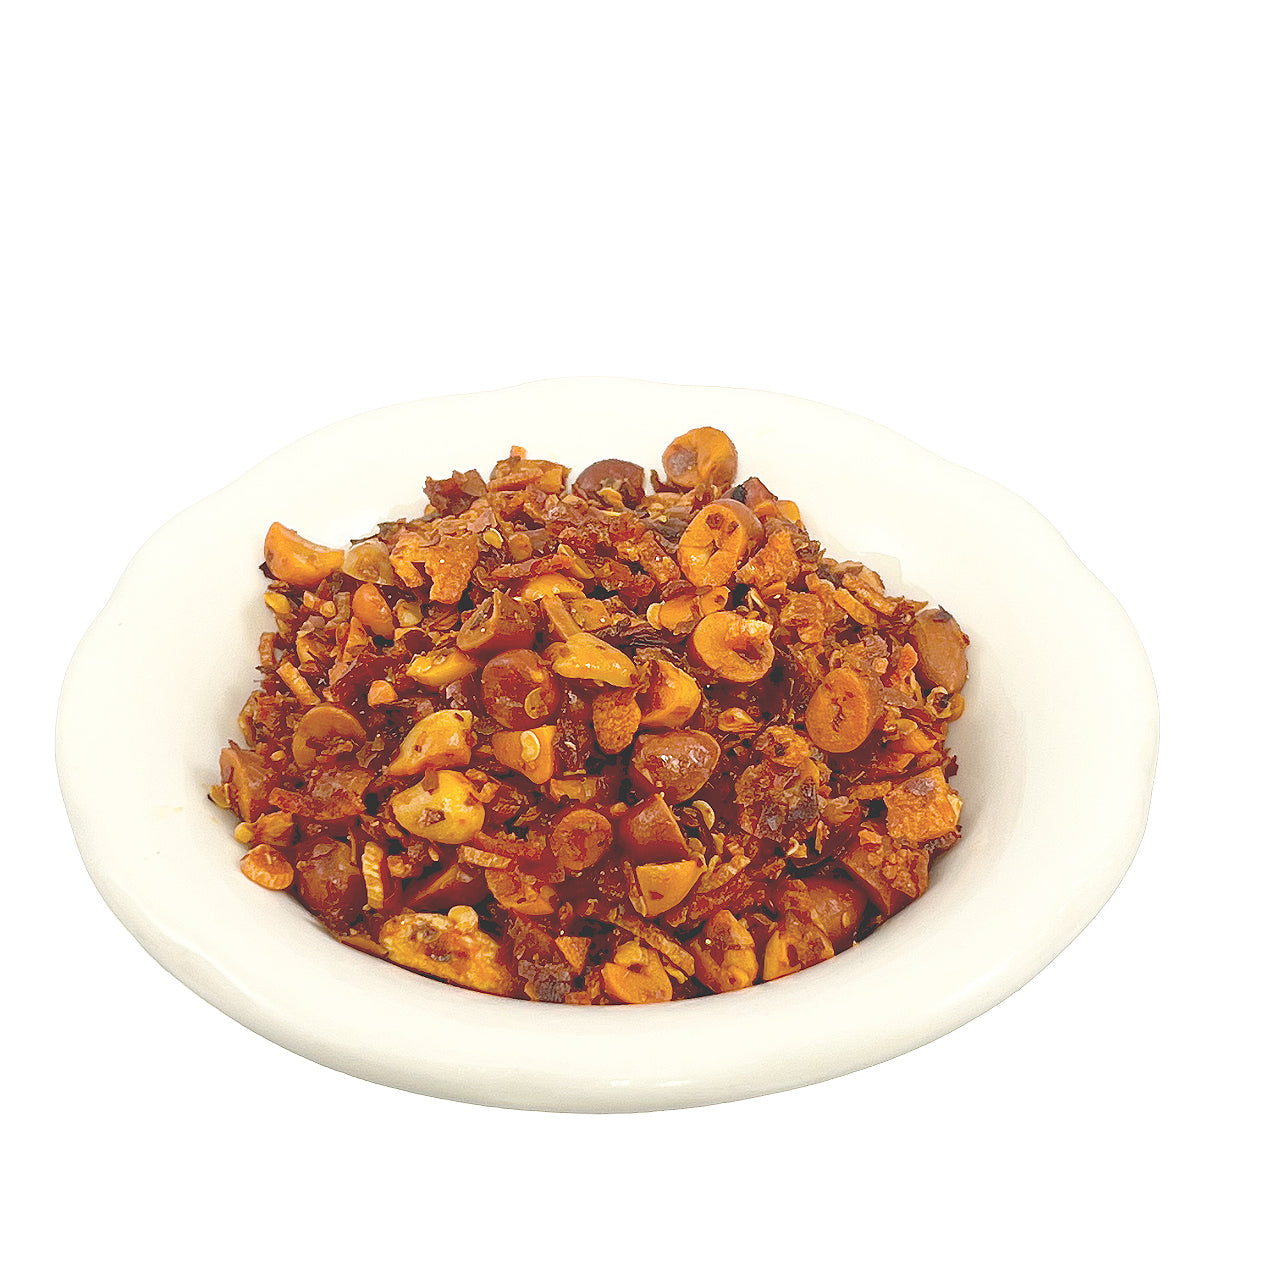 Gold Snack - Spicy Peanut မြေပဲငရုပ်သီးကြော် (မြေပဲရှယ်စပ်) 300g